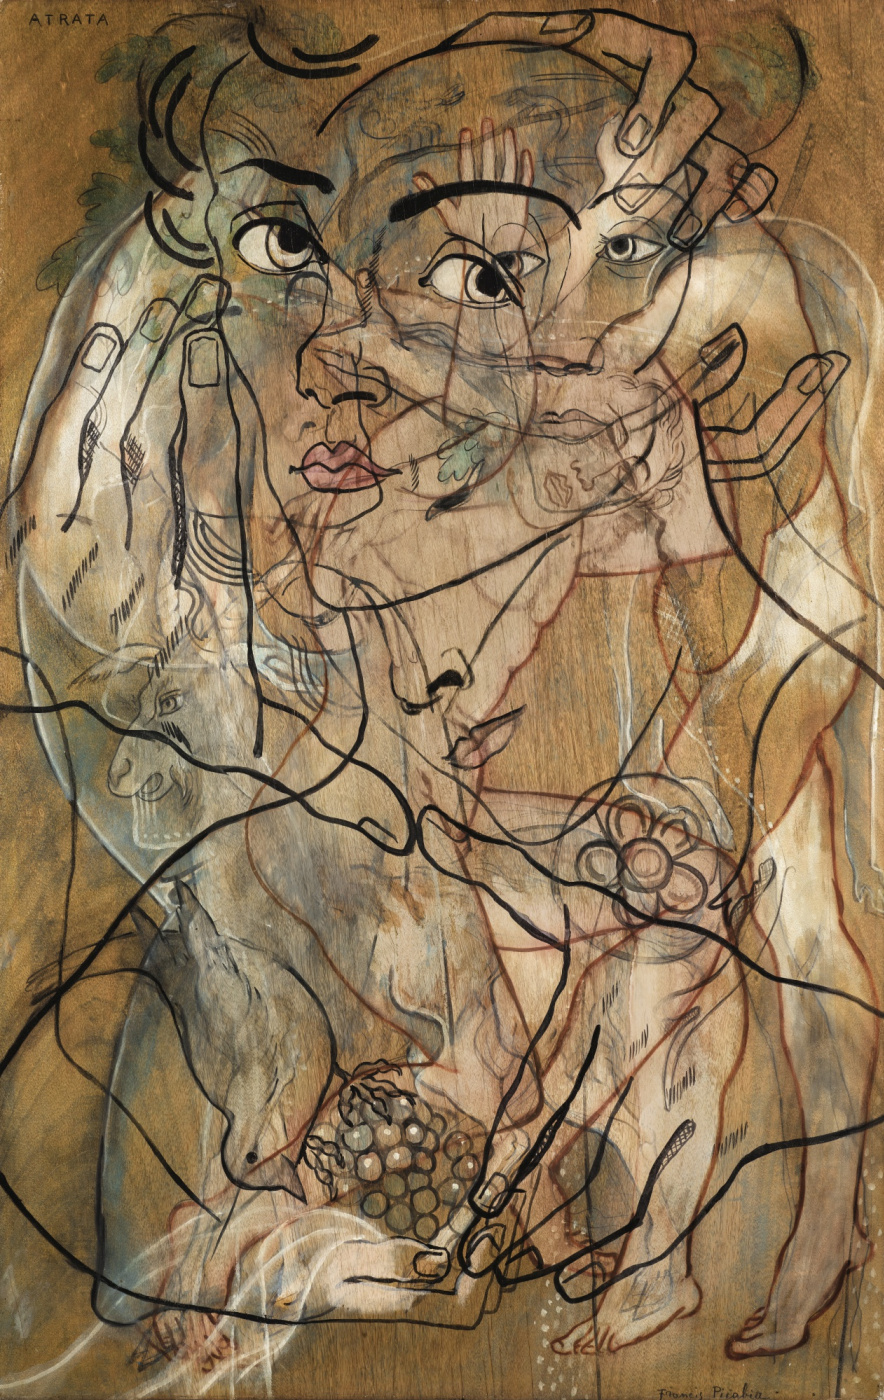 Francis Picabia. ATRATA